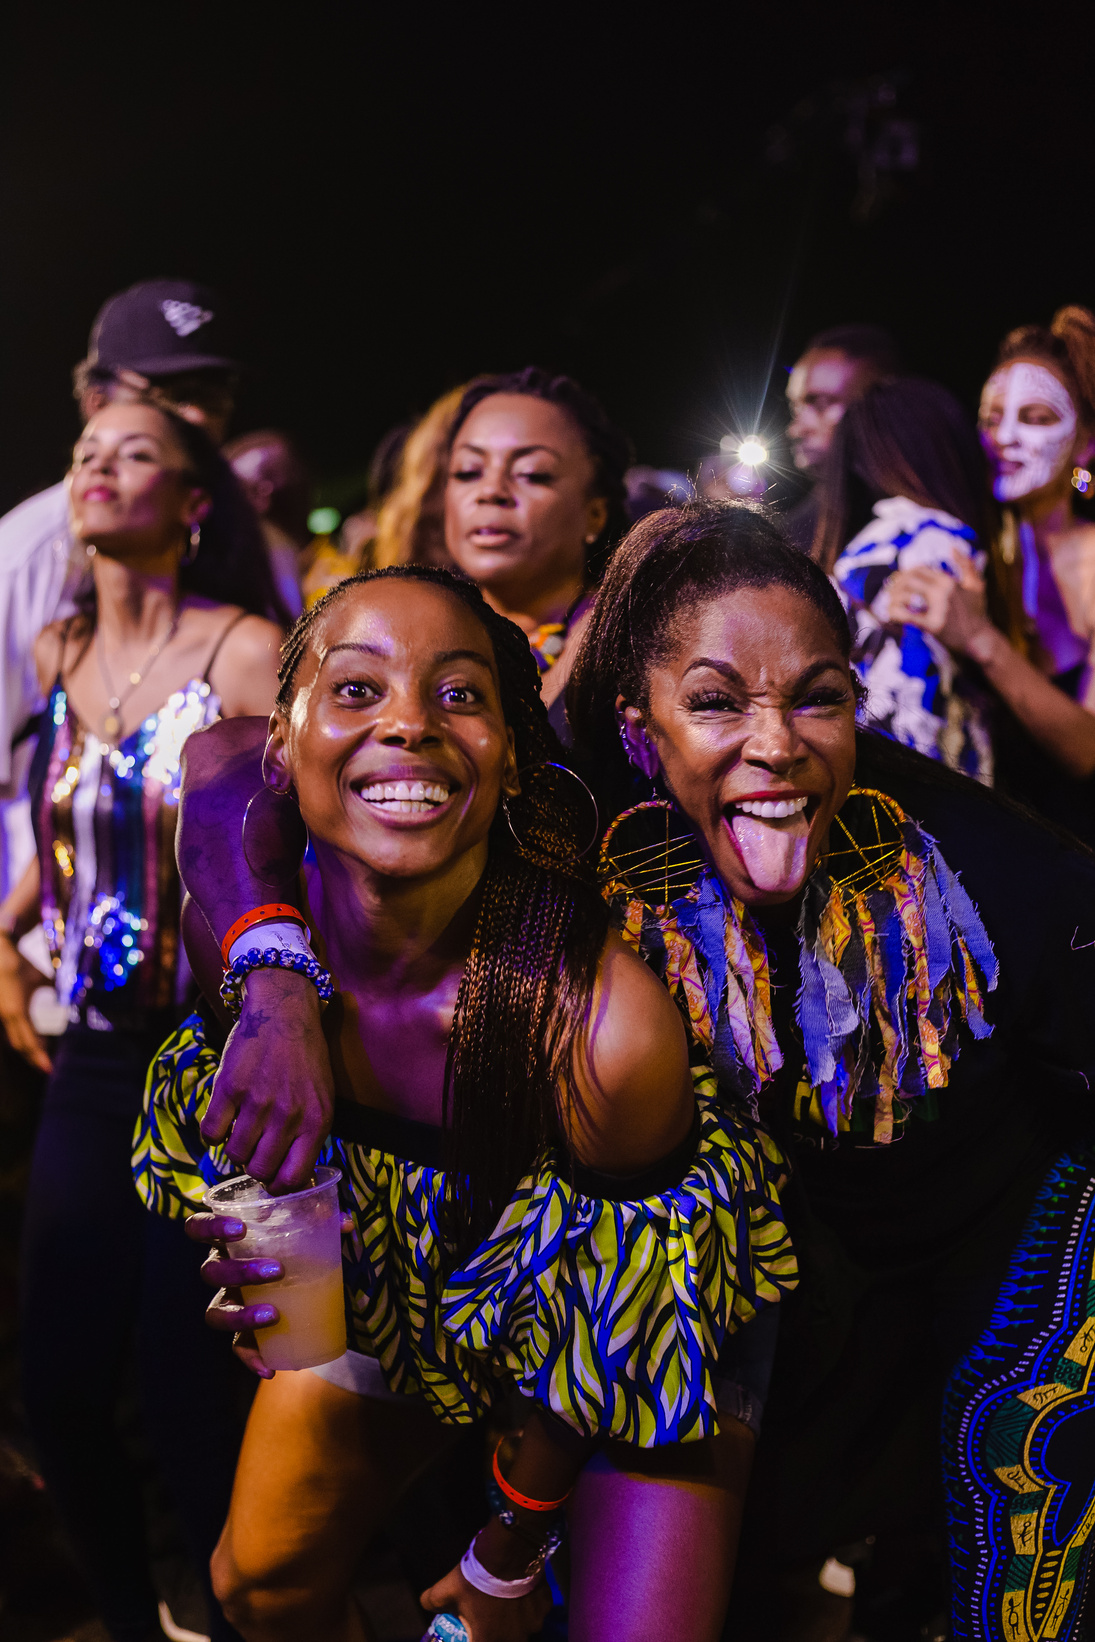 Cheerful Women in a Music Festival